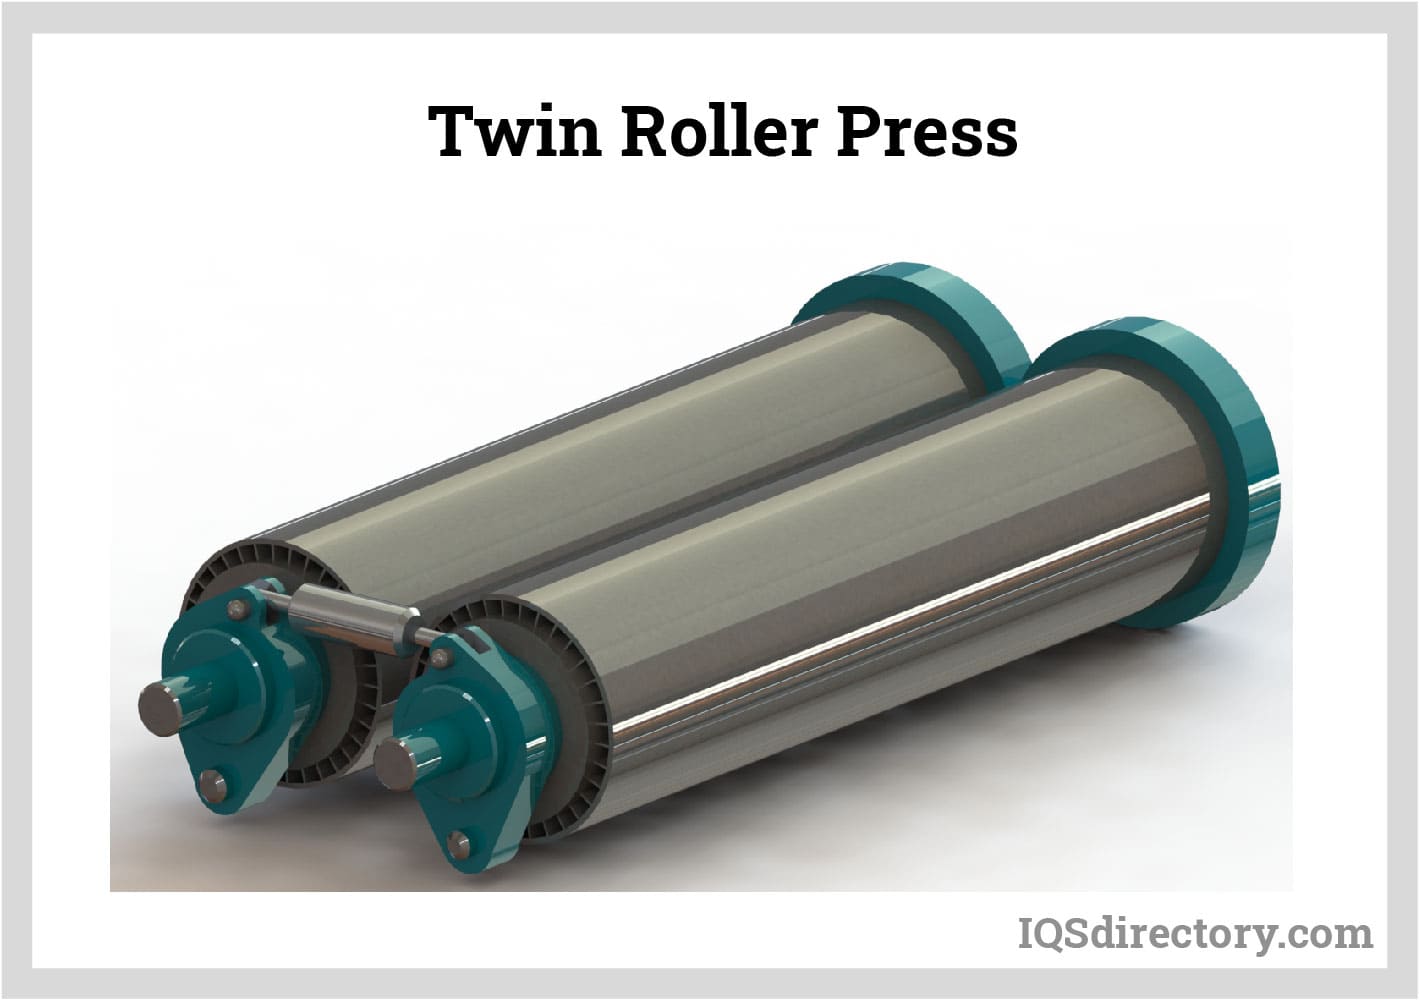 Twin Roller Press